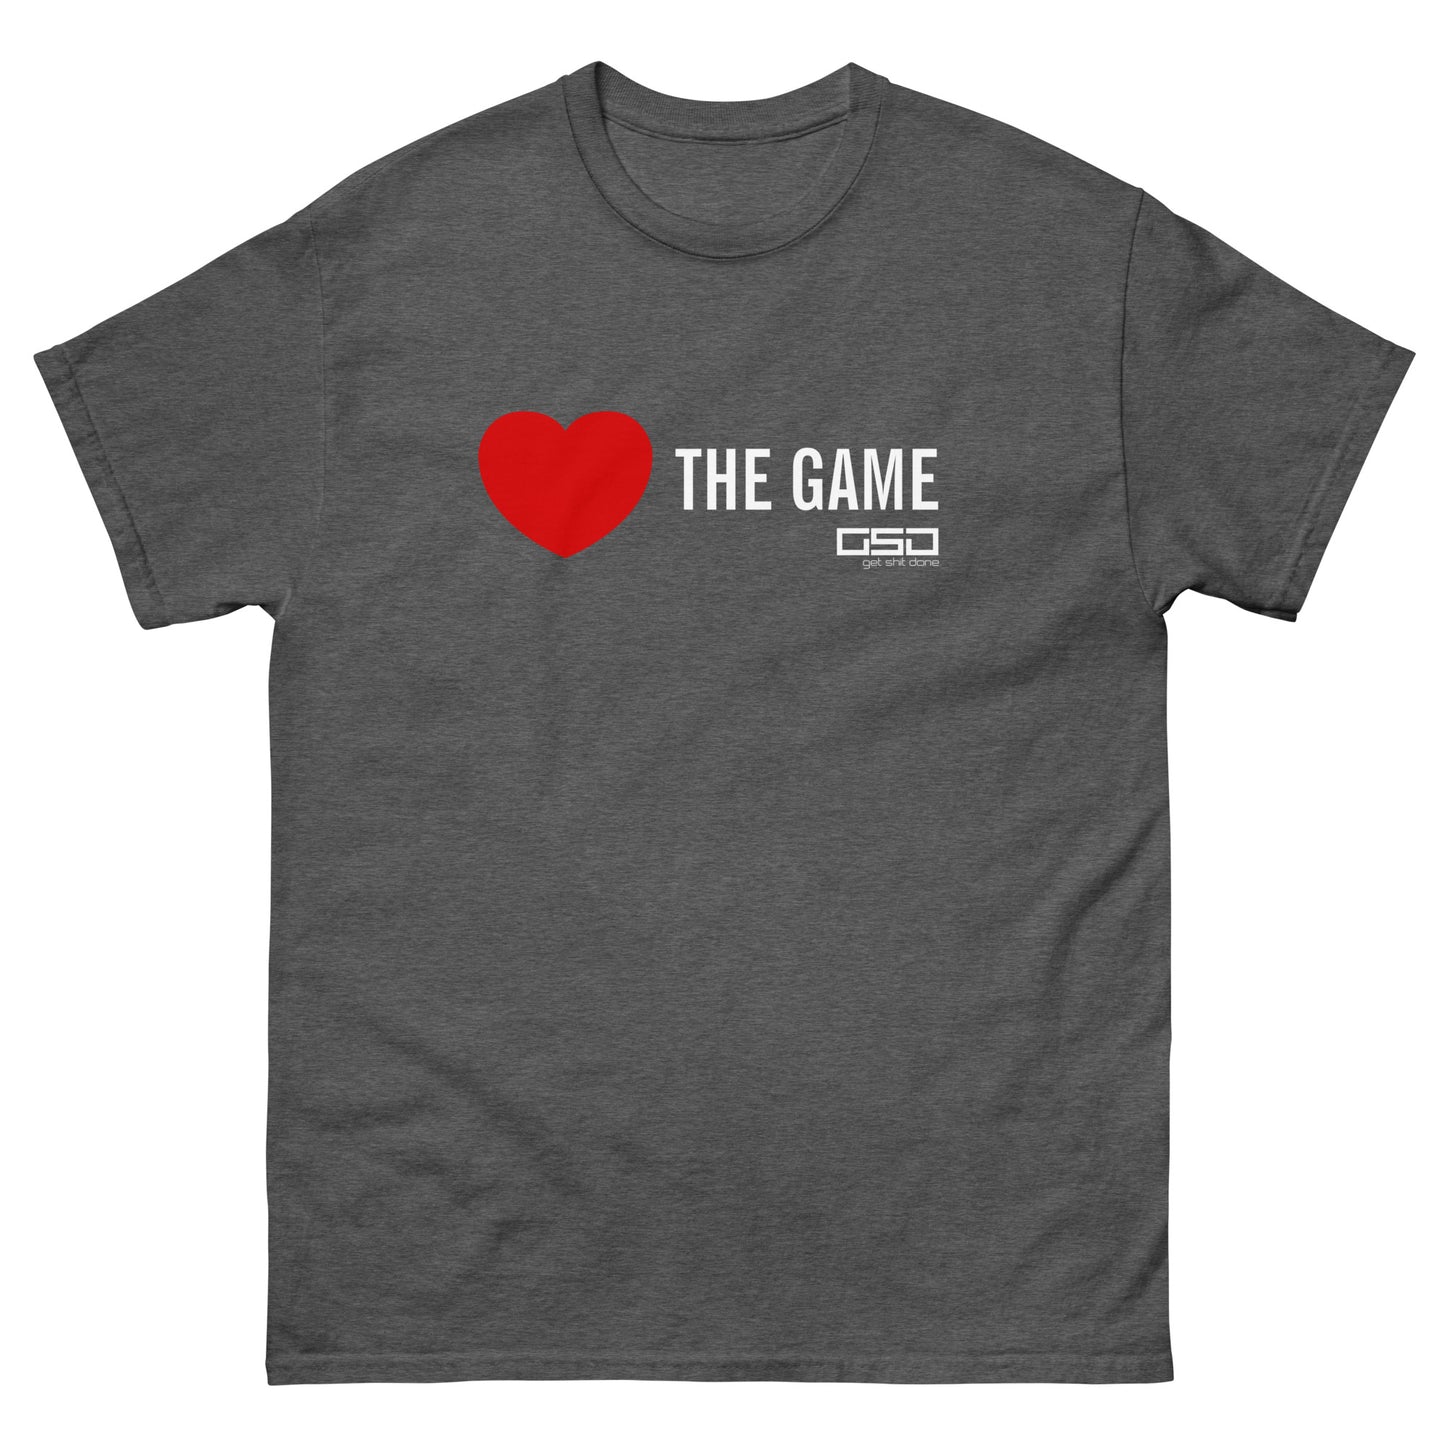 LOVE The Game-Classic tee